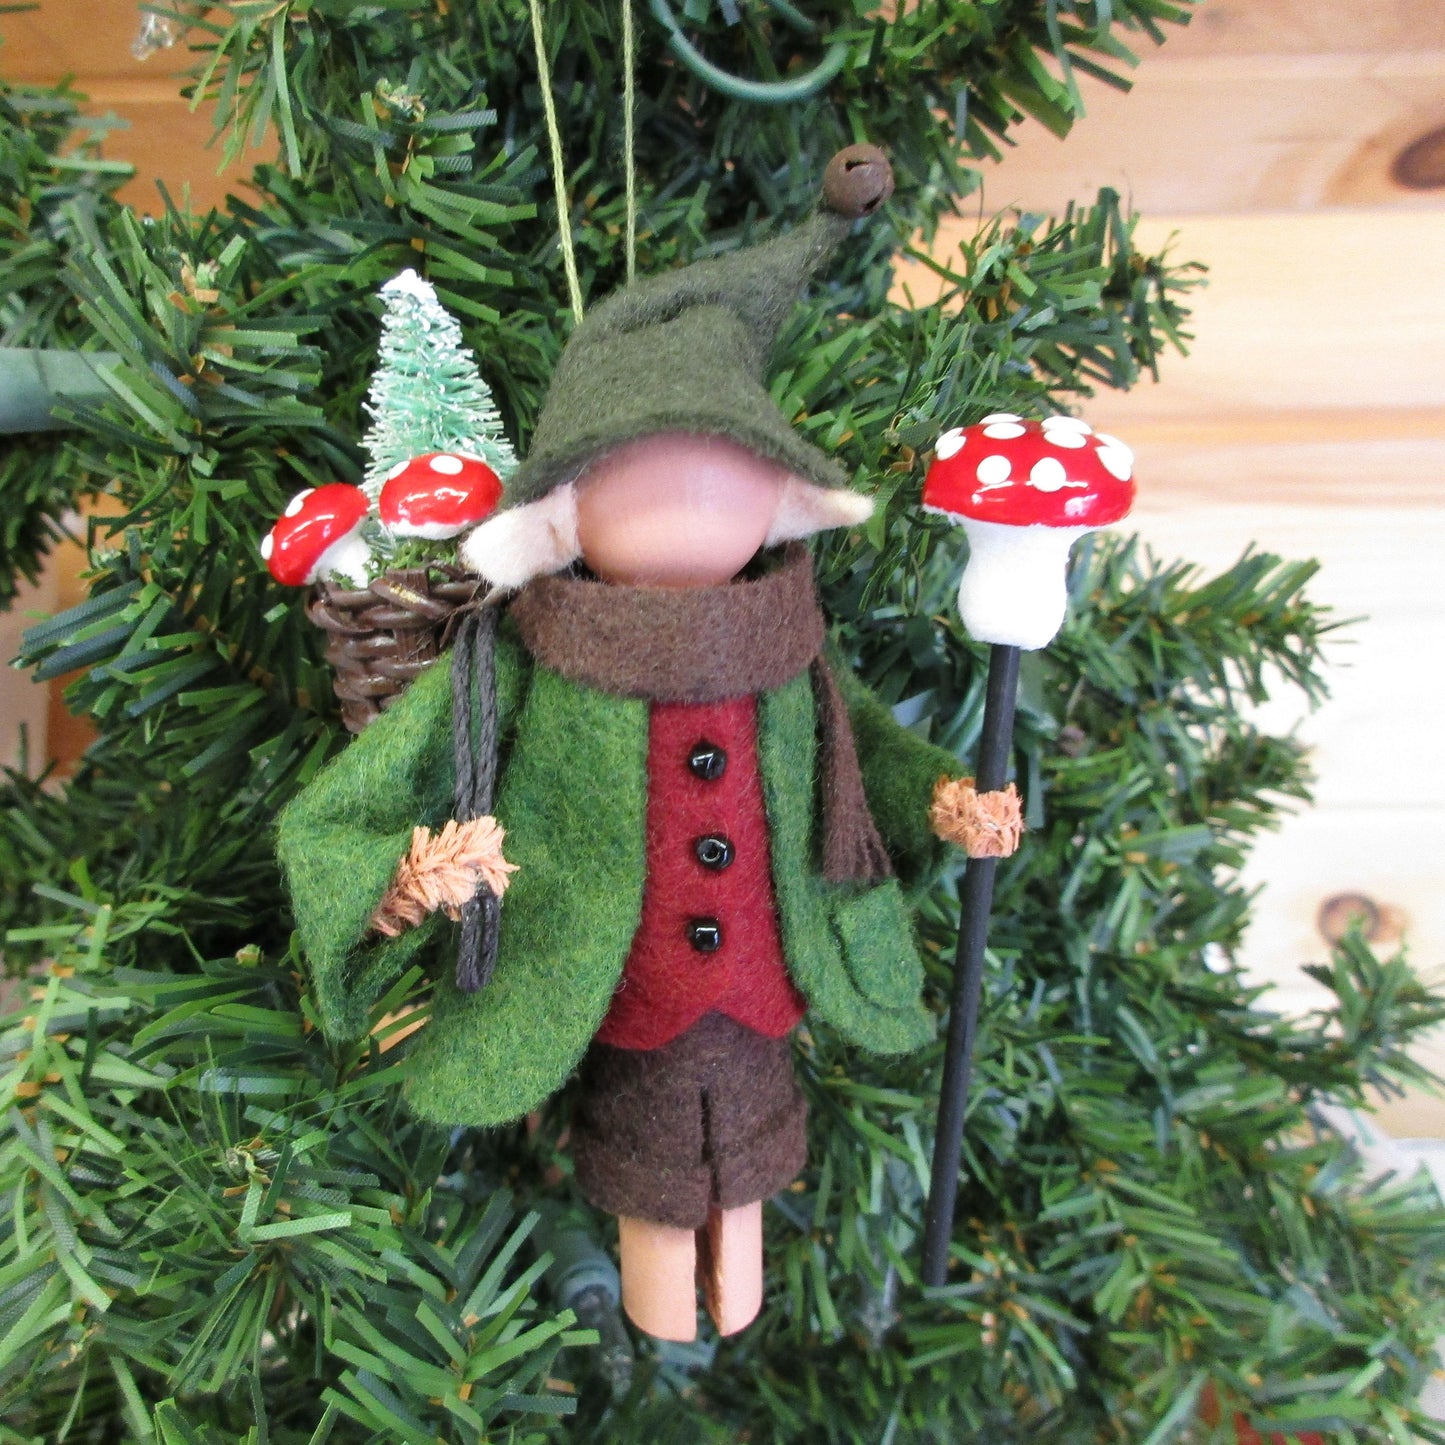 Woodland Elf